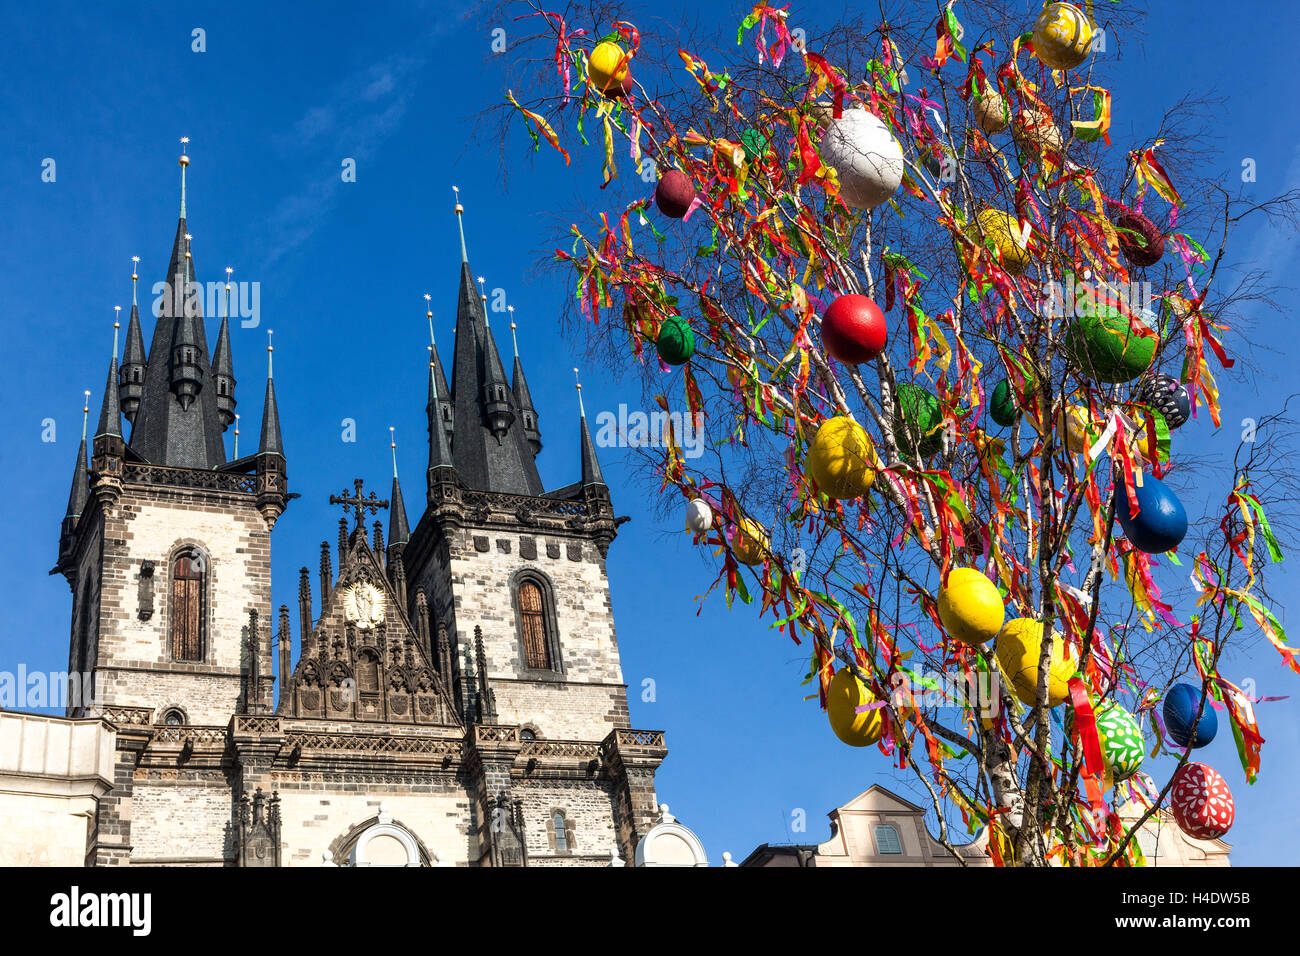 Praga Árbol de Pascua Praga Primavera Huevos colgantes en ramas Praga Plaza de la Ciudad Vieja Praga República Checa Europa Pascua Decoración Tradicional Exterior Foto de stock